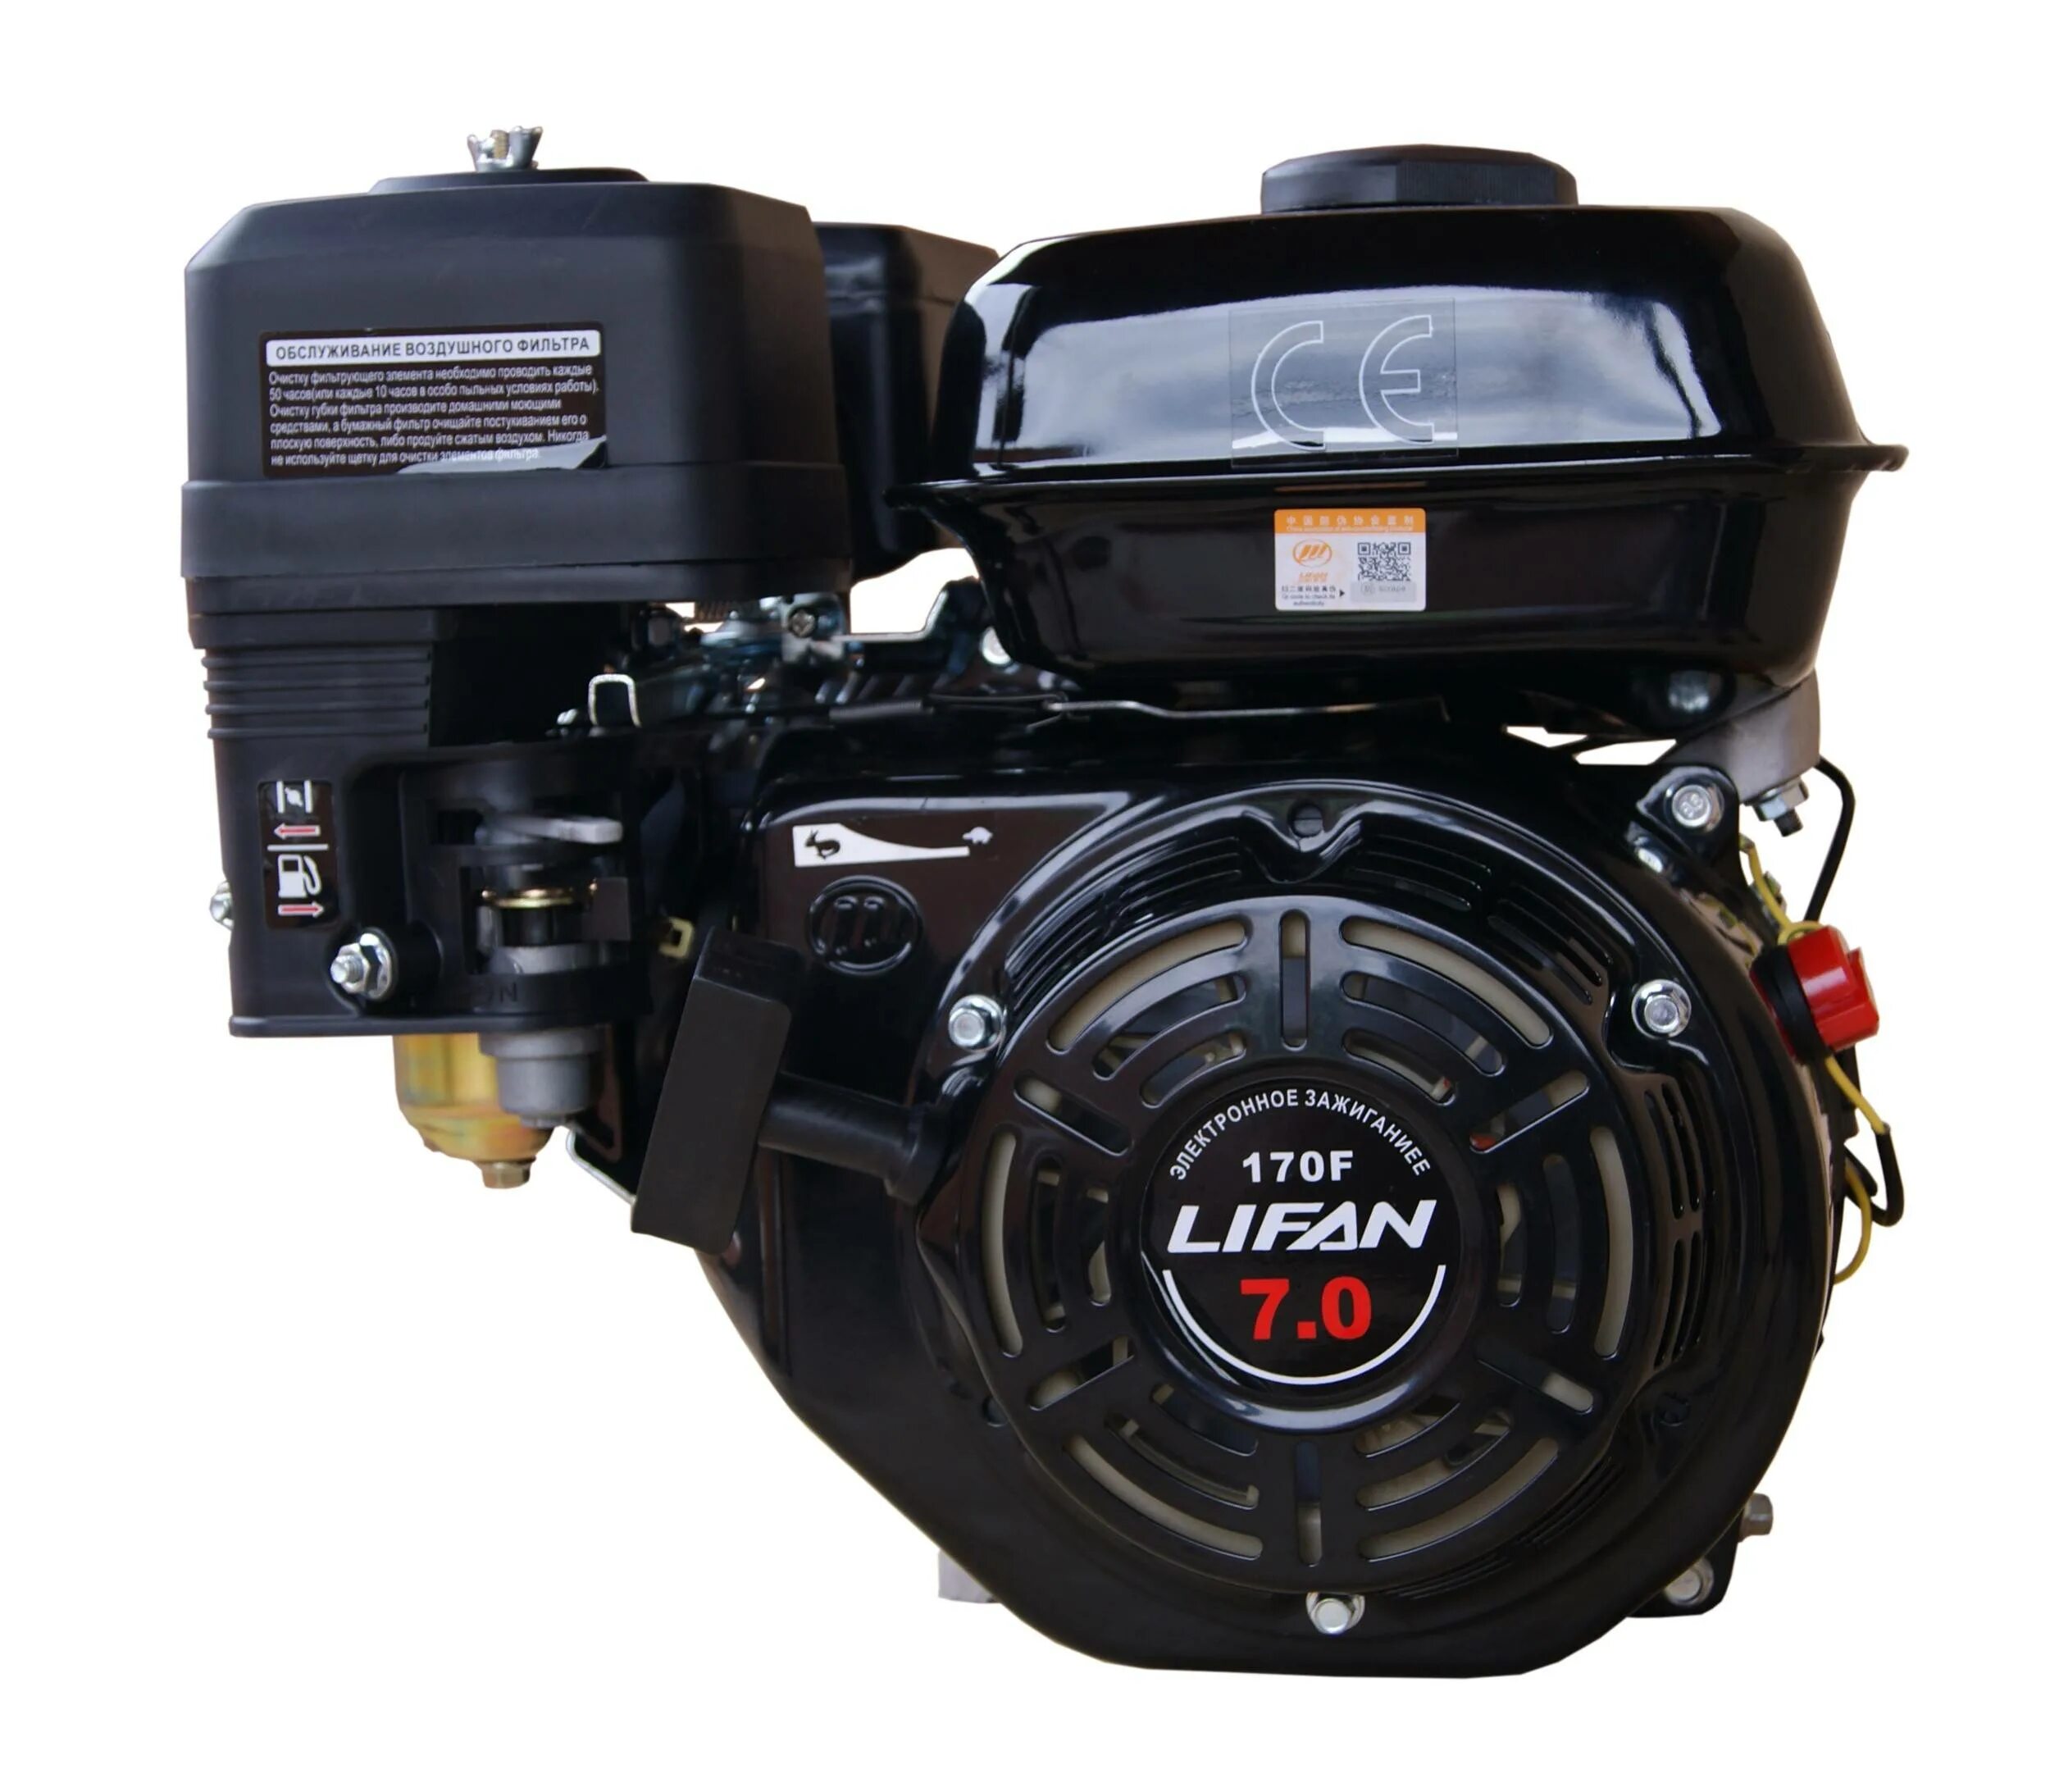 Двигатель 170 f. Двигатель бензиновый Lifan 170f. Lifan 170f 7 л.с. Двигатели Лифан 170. Двигатель Lifan 170f 7,0 л.с..